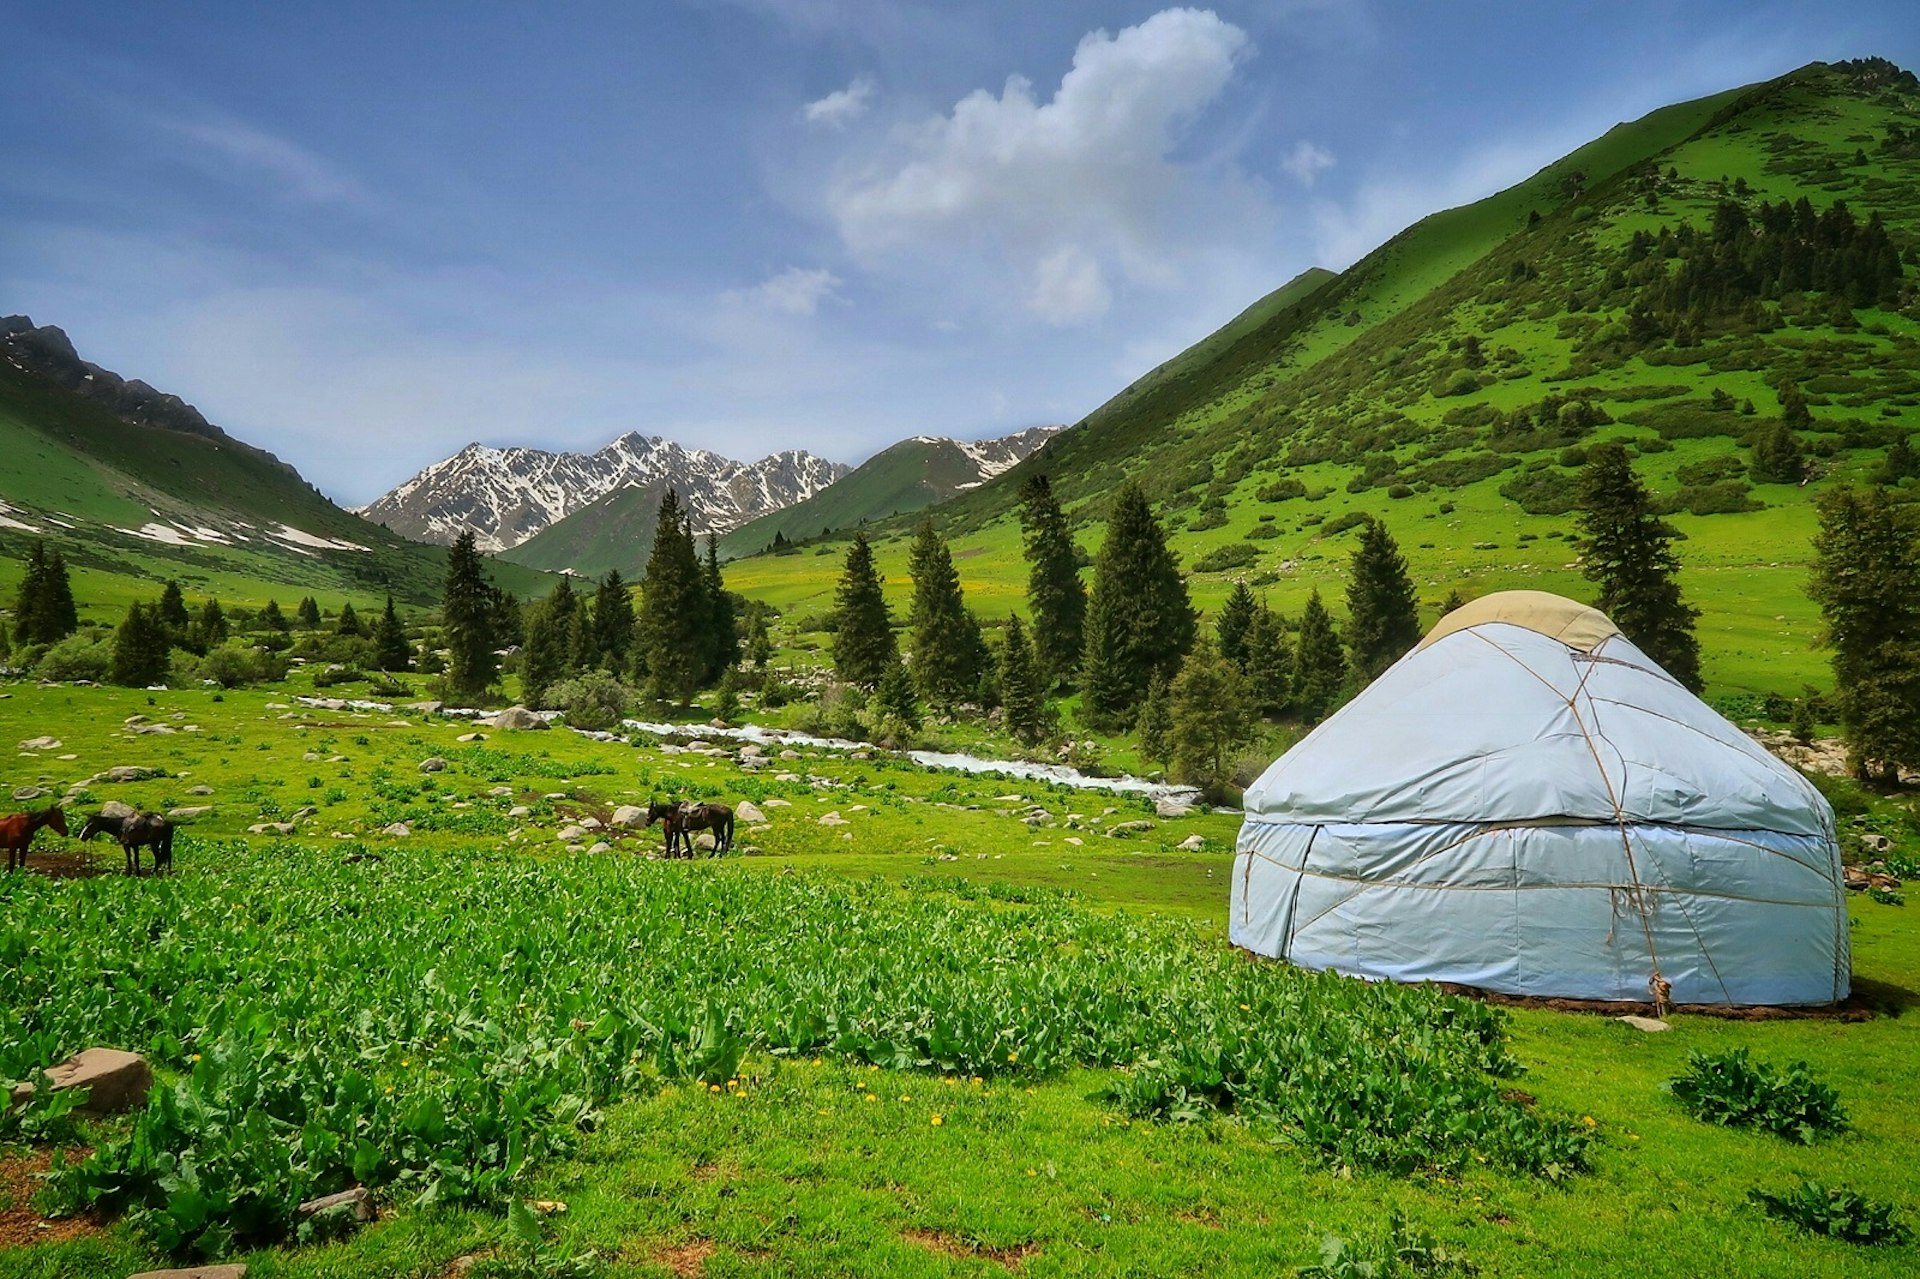 Eki Chat Yurt Camp, Kyrgyzstan © Nick Wharton & Dariece Swift - www.goatsontheroad.com